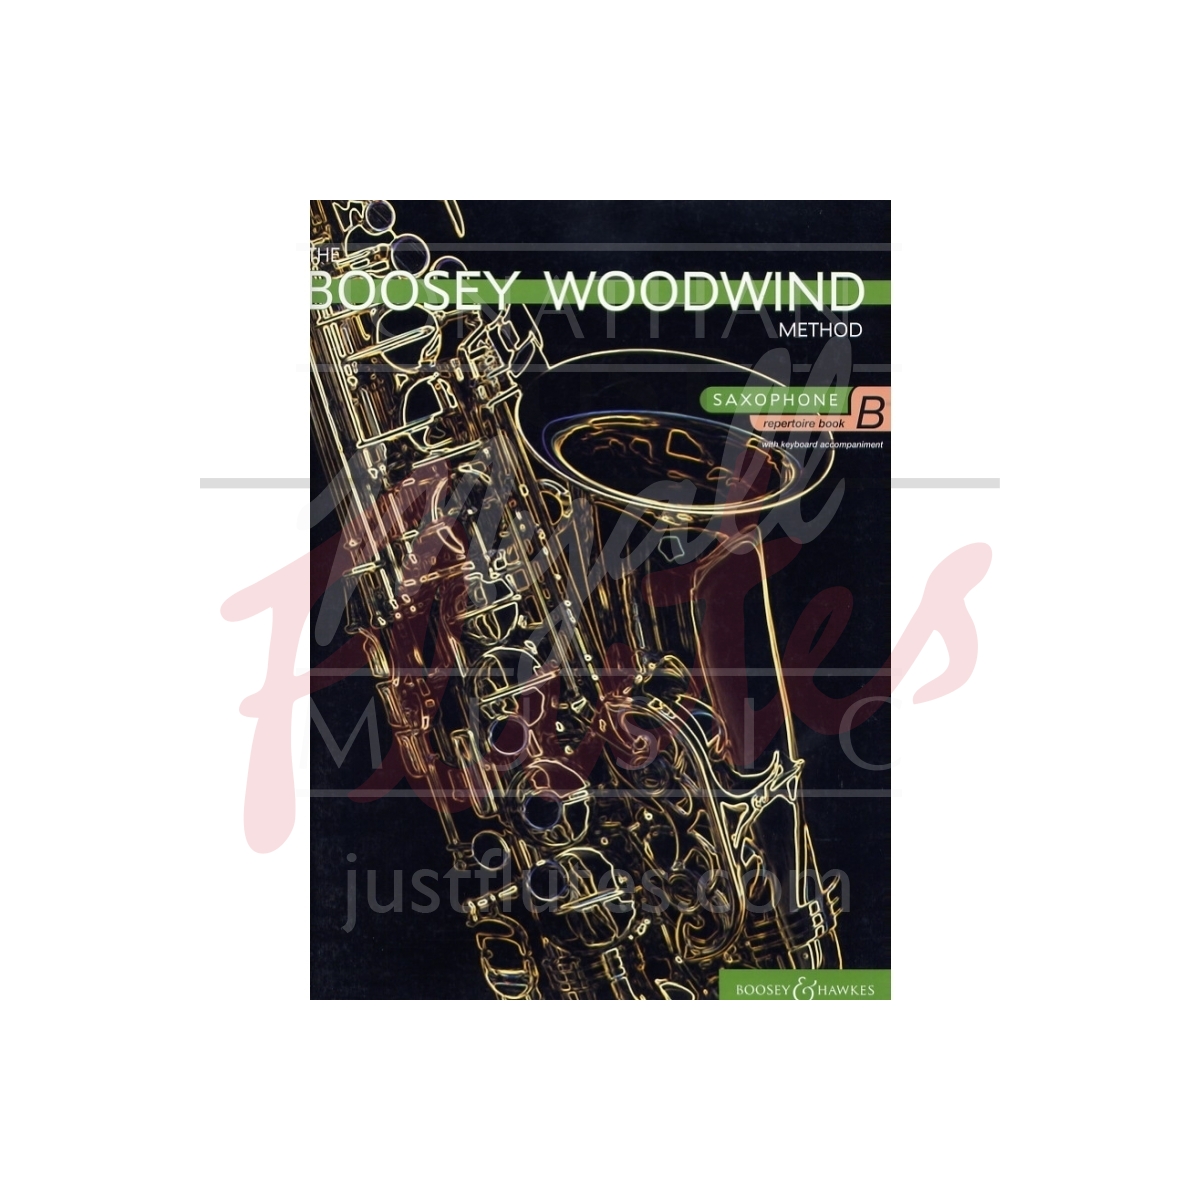 The Boosey Woodwind Method [Alto Sax] Repertoire Book B